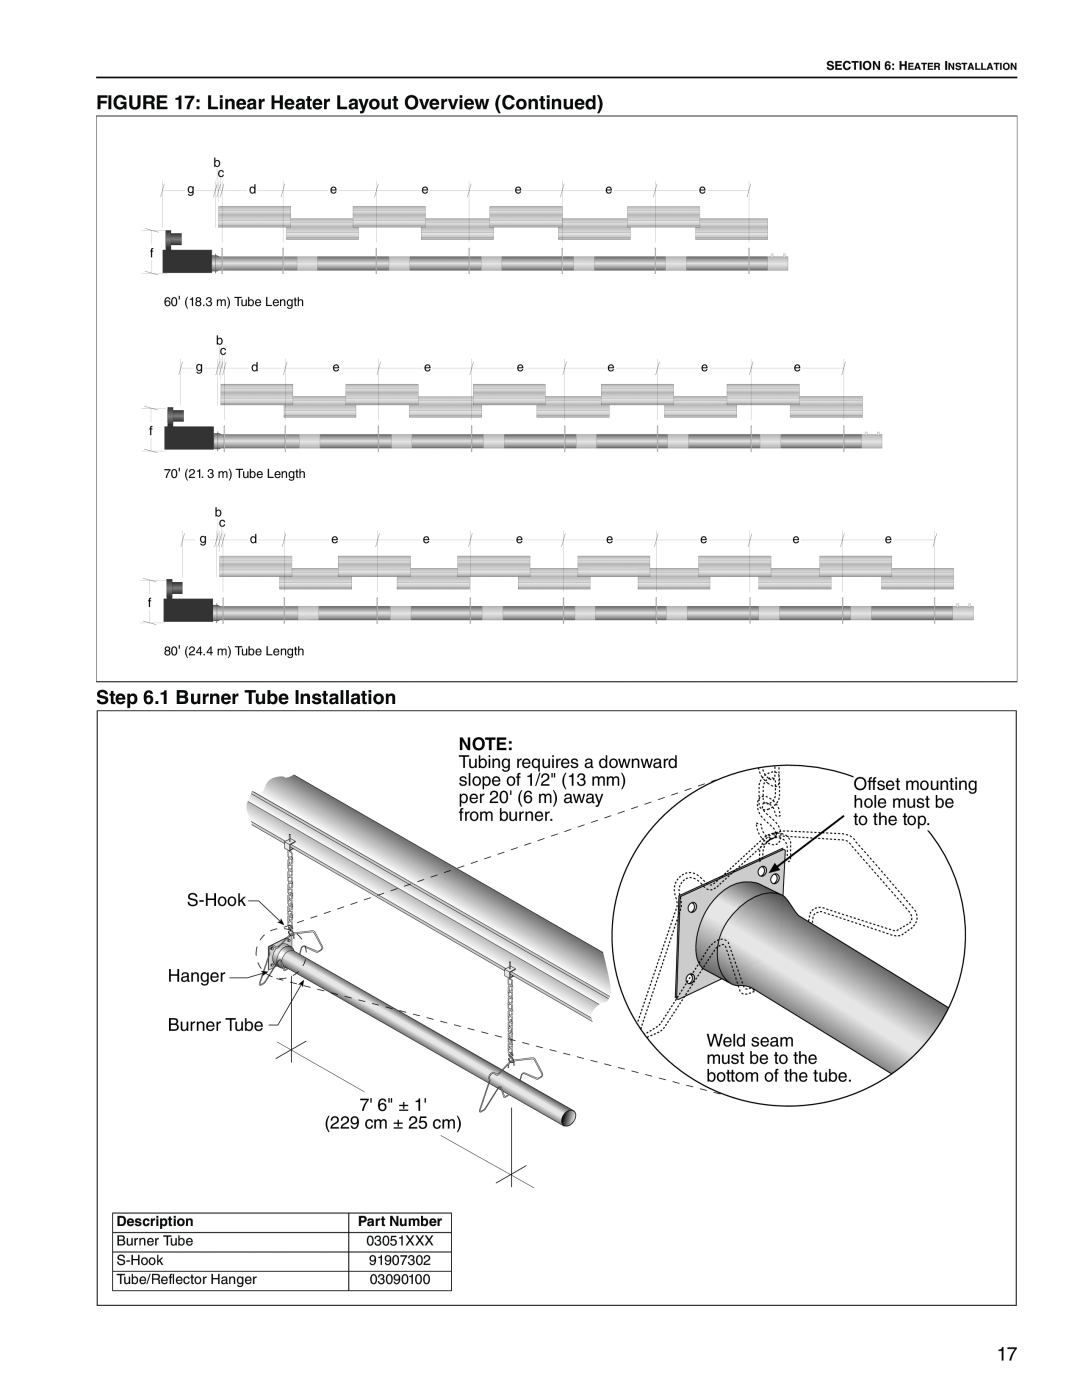 Roberts Gorden Linear Heater manual 1 Burner Tube Installation, Tubing requires a downward slope of 1/2 13 mm, Description 